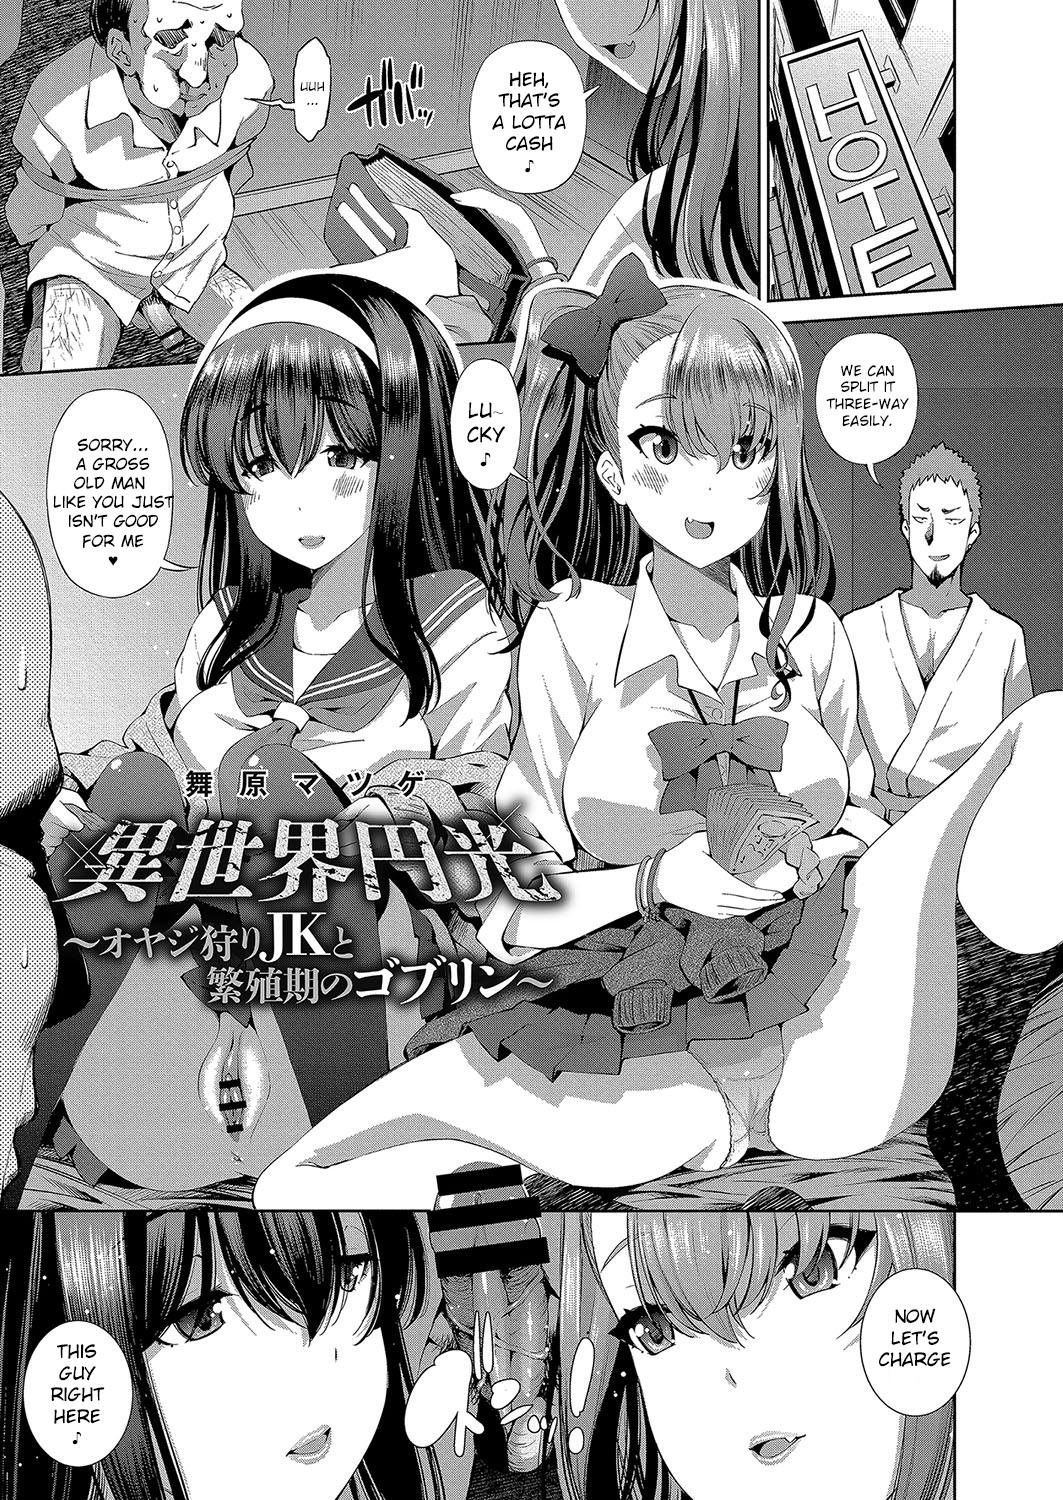 1063px x 1500px - Okayusan] School Caste Ch. 4 - [Okayusan] School Caste Ch. 4 [English] -  Free Hentai Online - Porn Comics - Adult Comics - Hentai Manga